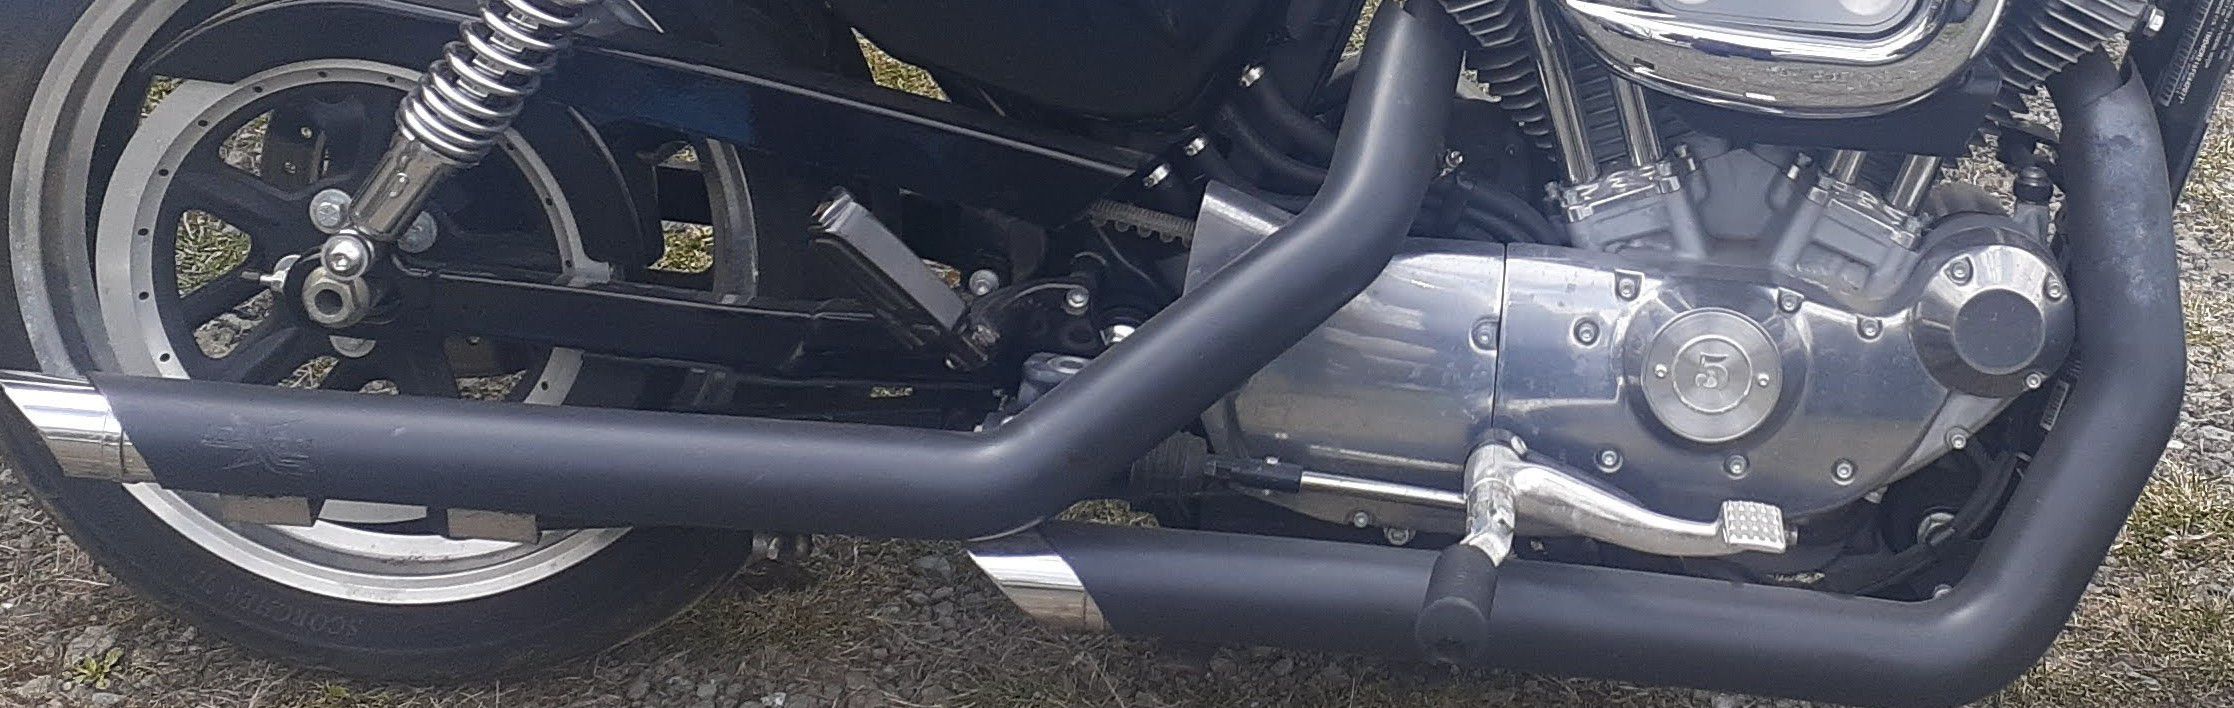 2015 RCXhaust Slip on with full black heat shield